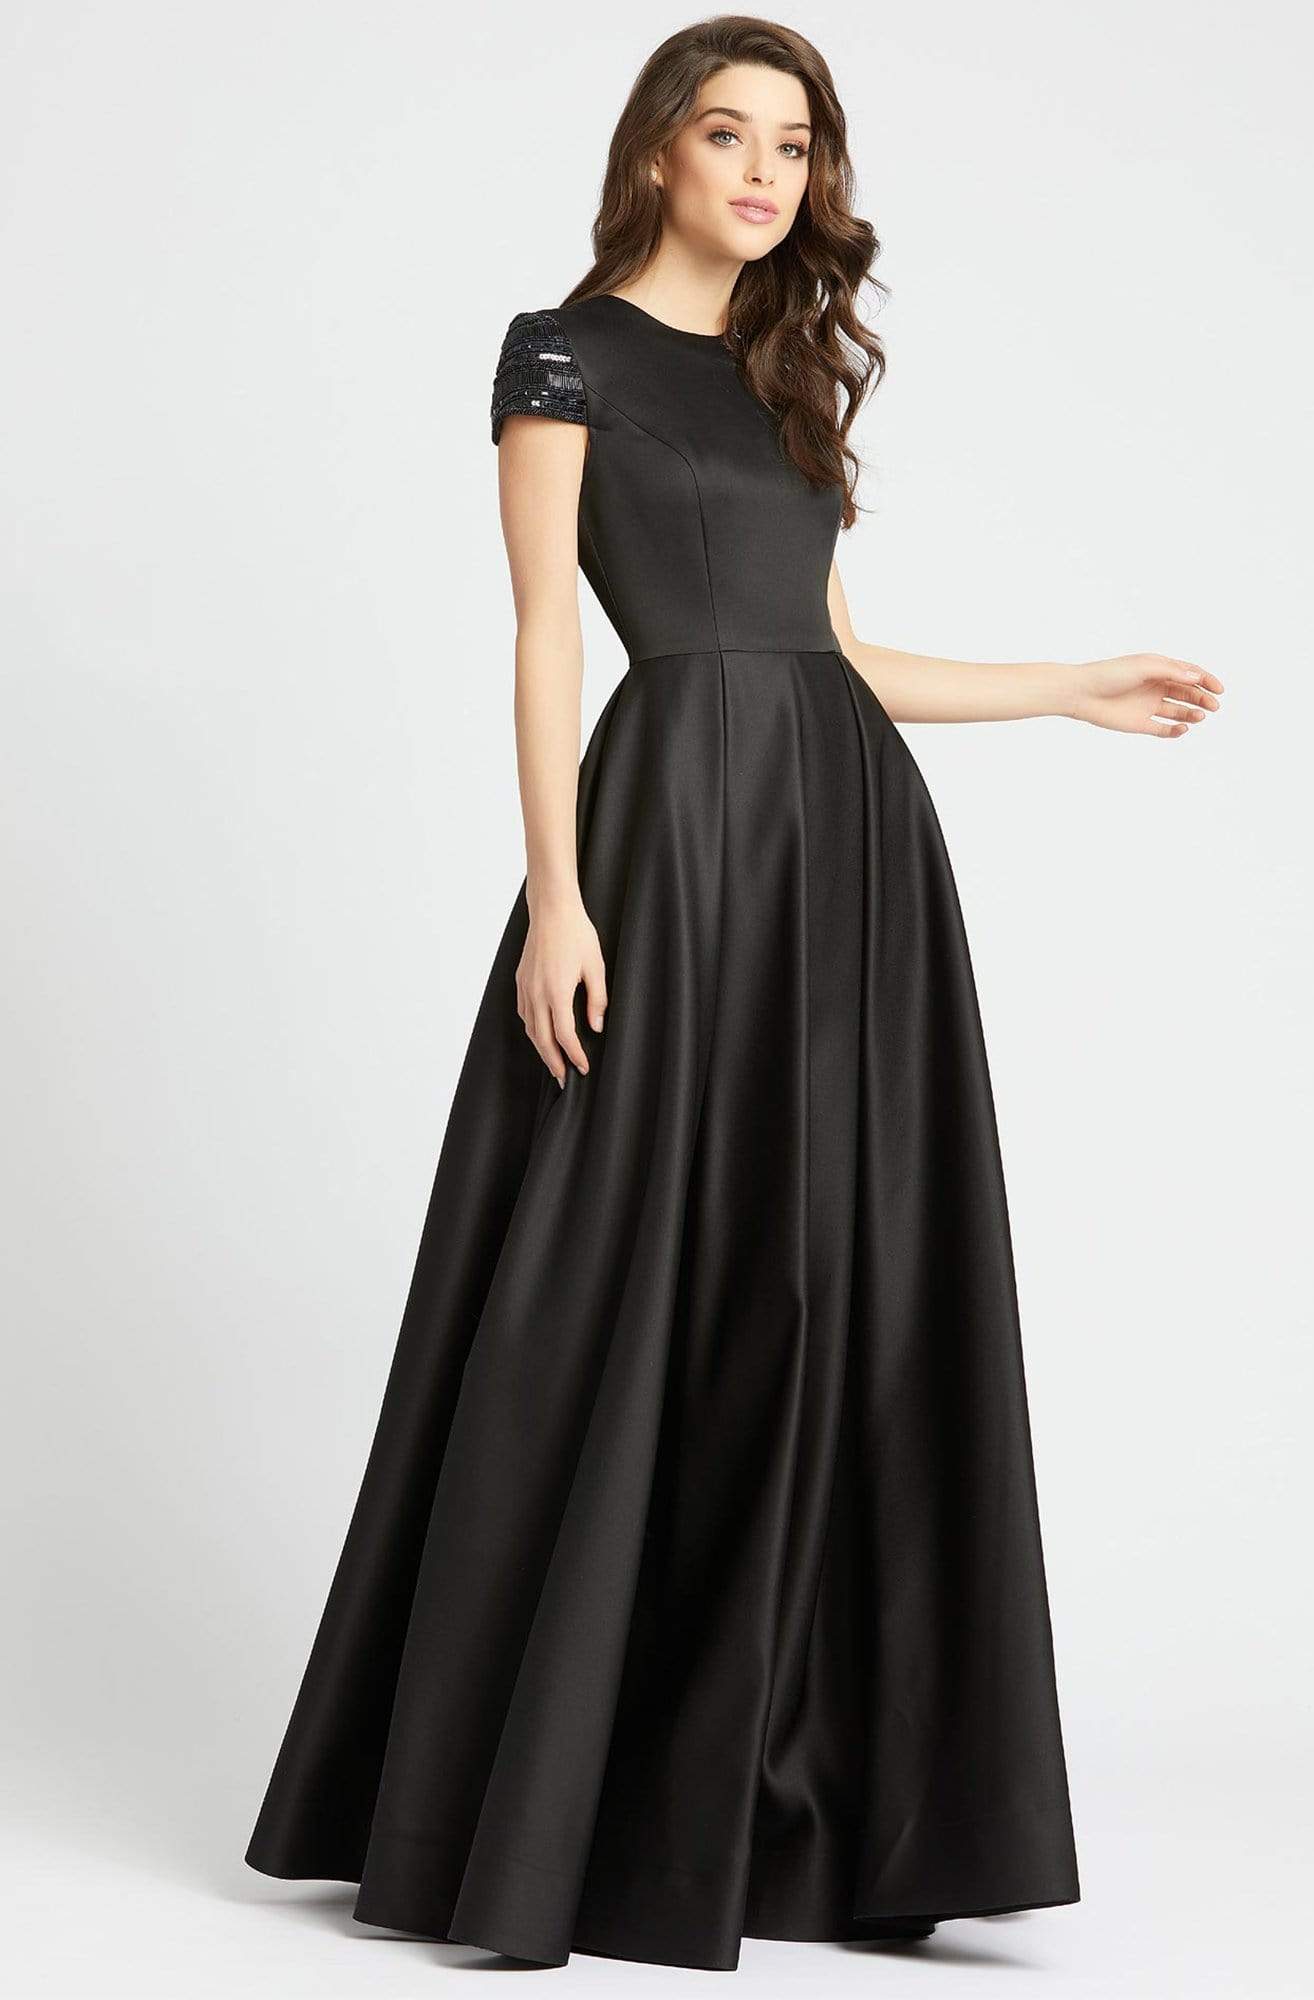 leena Duggal - 25947I Jewel Pleated A-Line Evening Gown
